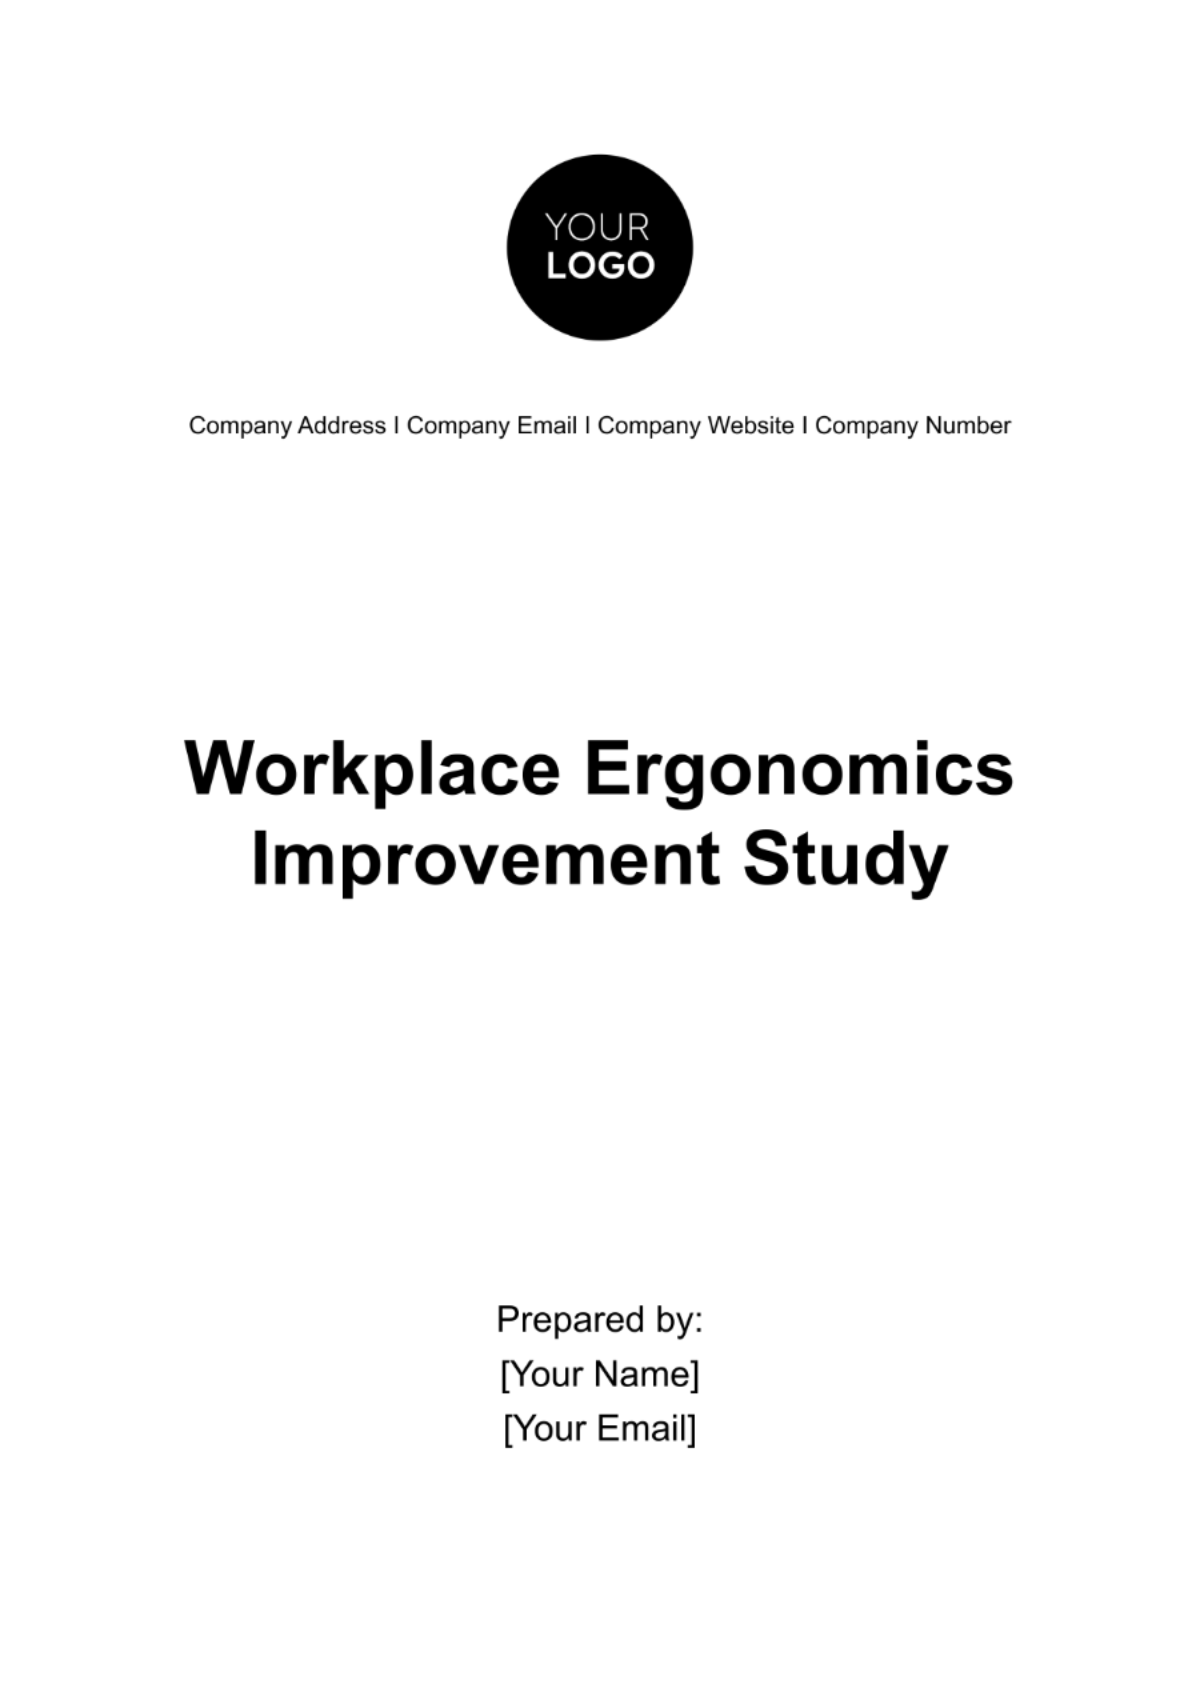 Workplace Ergonomics Improvement Study Template